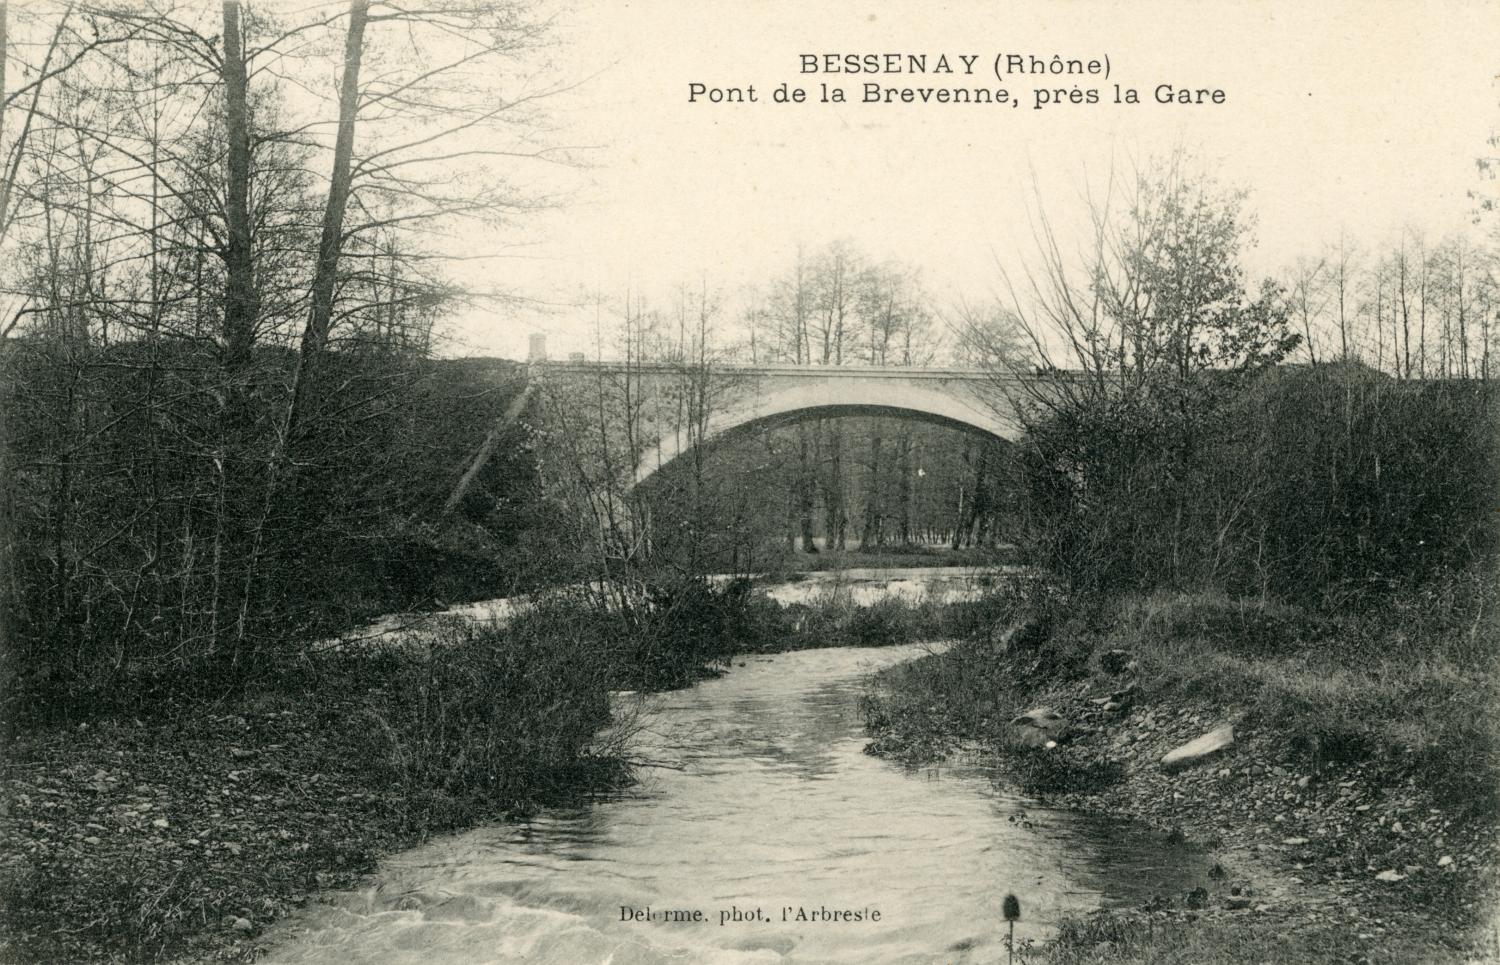 Bessenay (Rhône). - Pont de la Brevenne, près de la gare